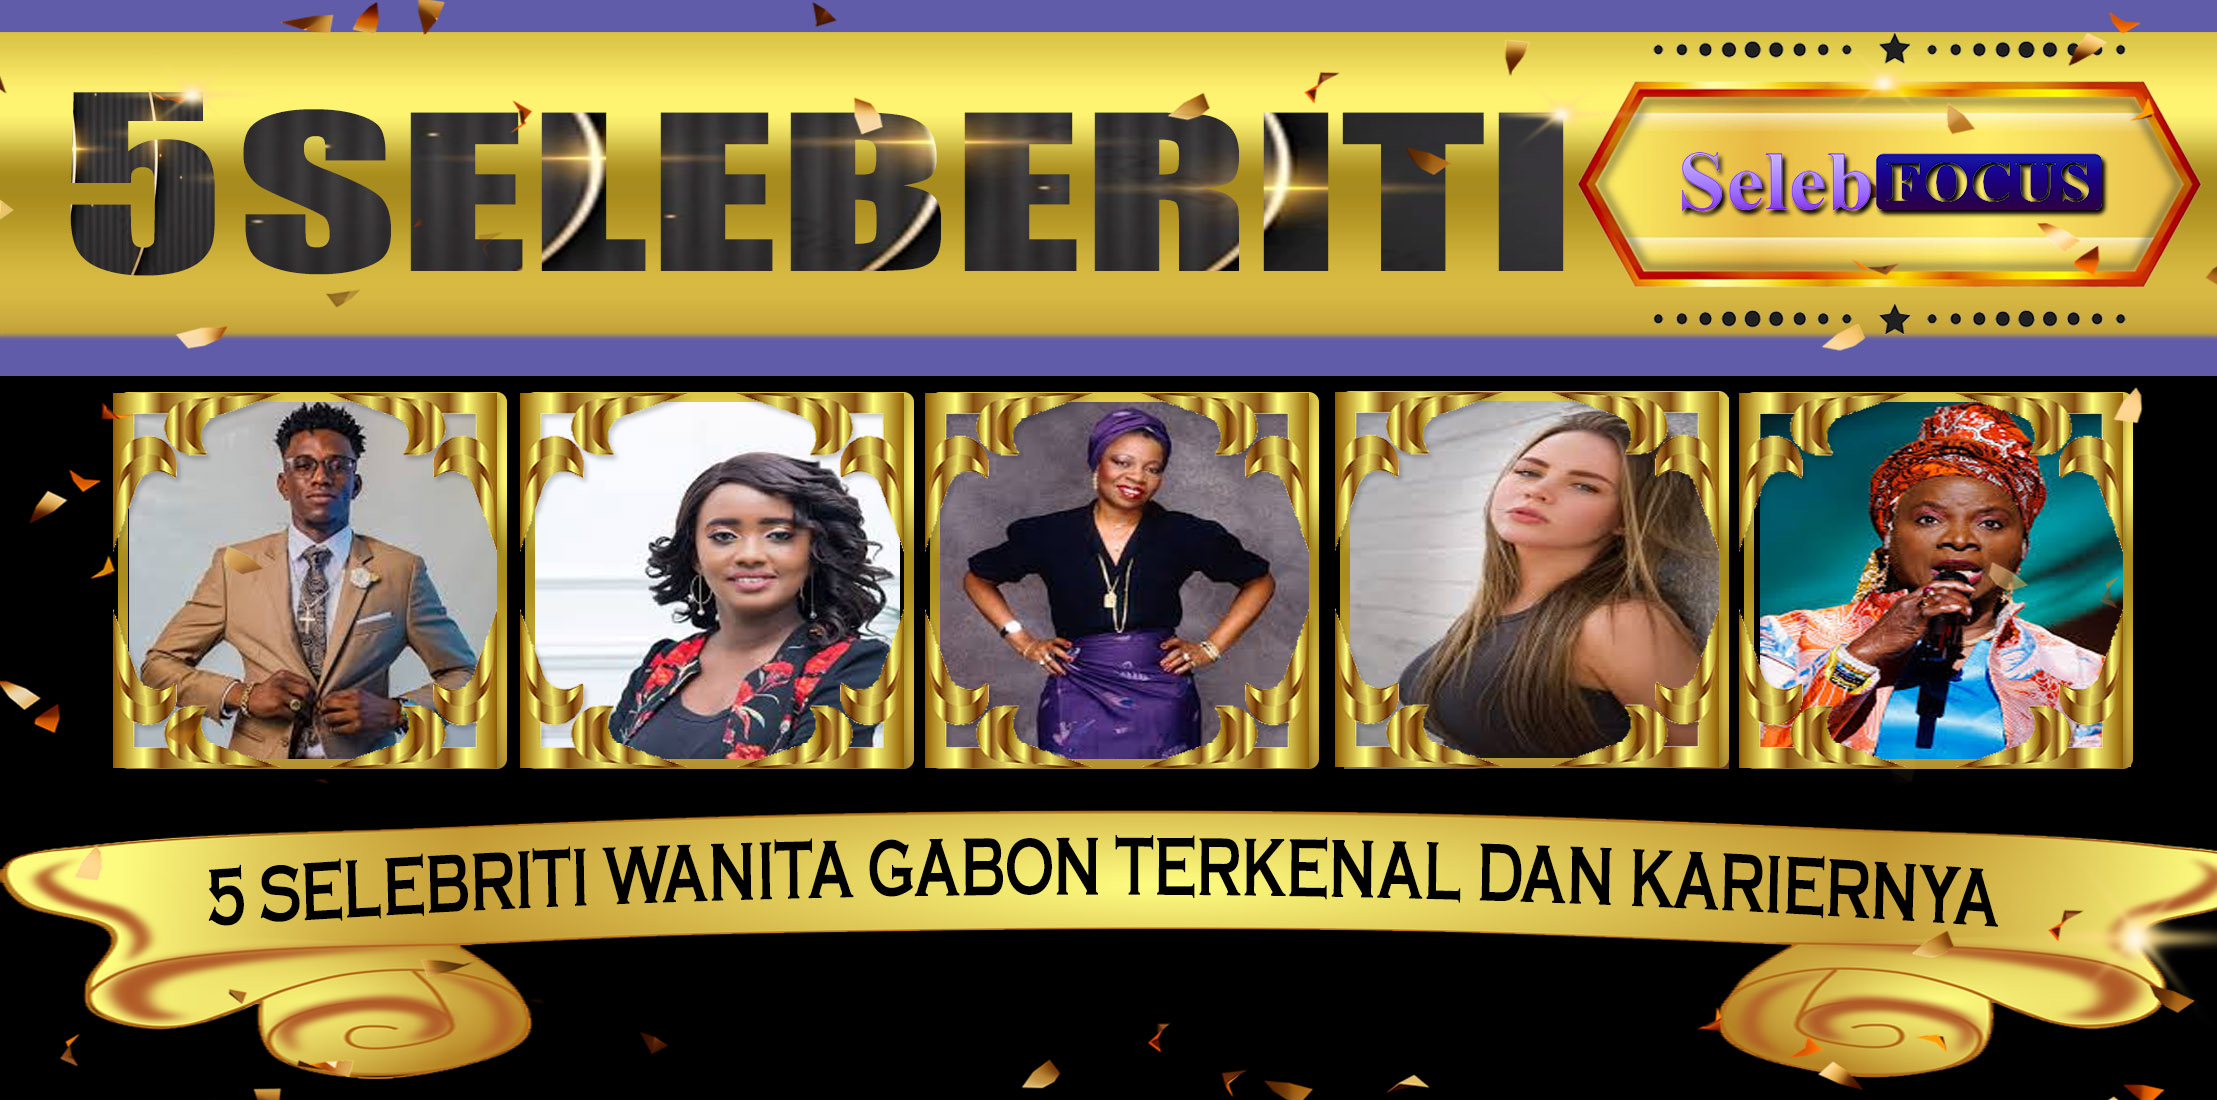 5 Selebriti Wanita Gabon Terkenal dan Kariernya